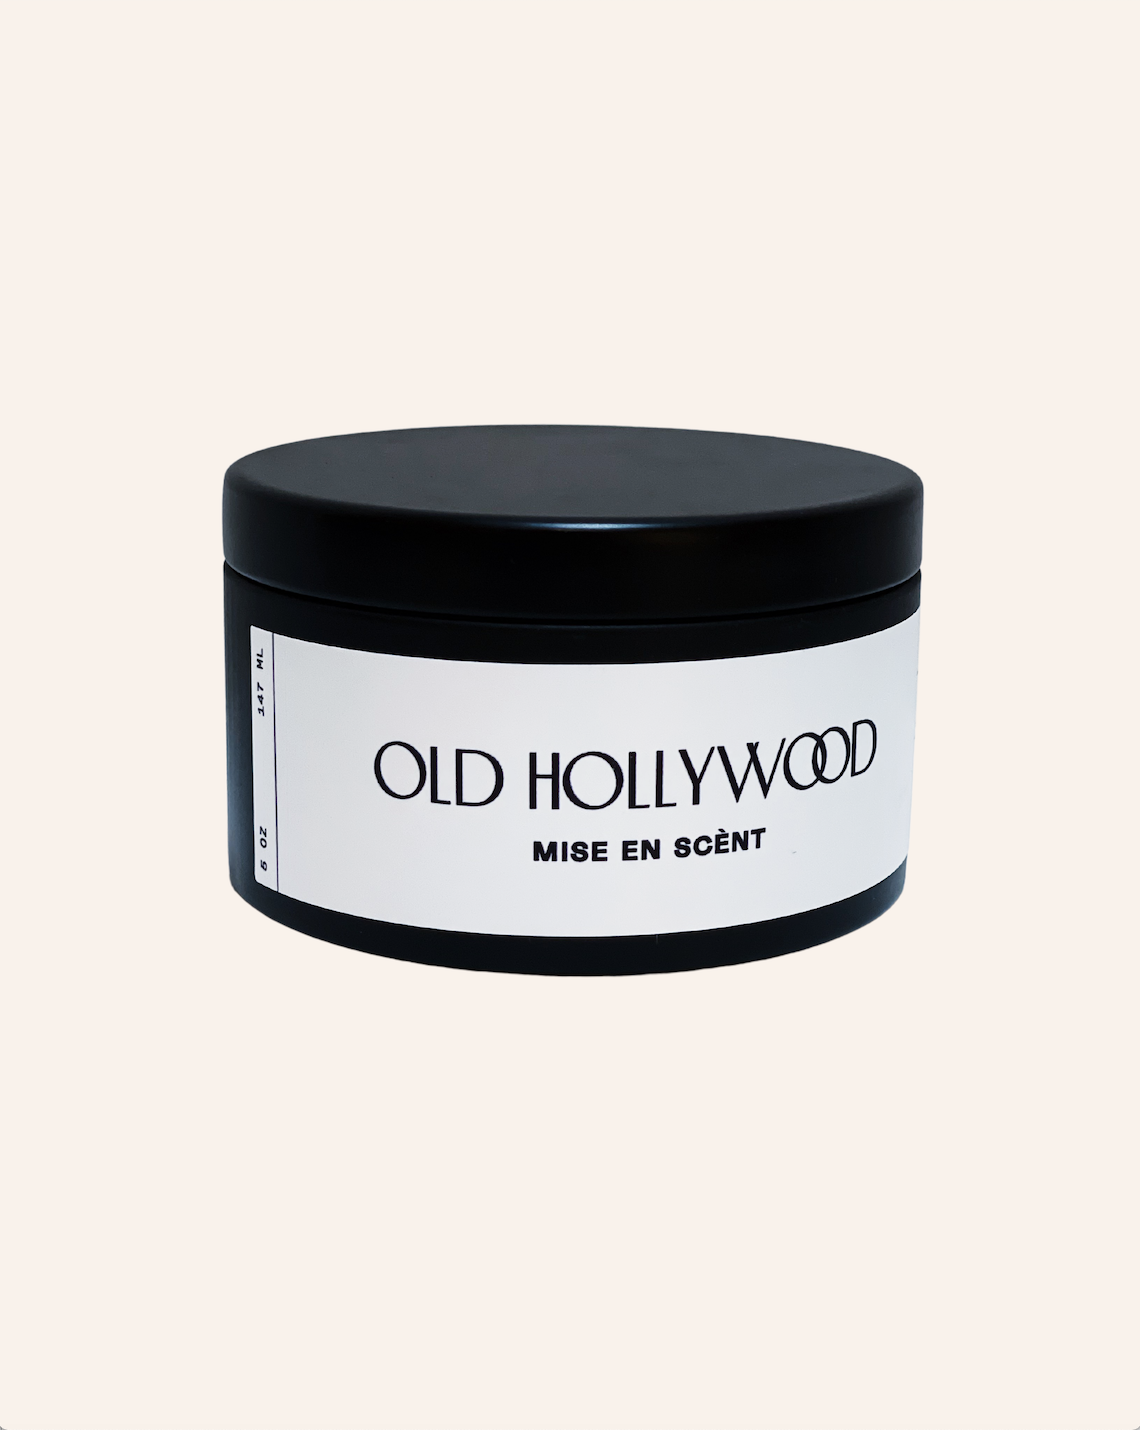 "Old Hollywood" Boudoir Tin Candle